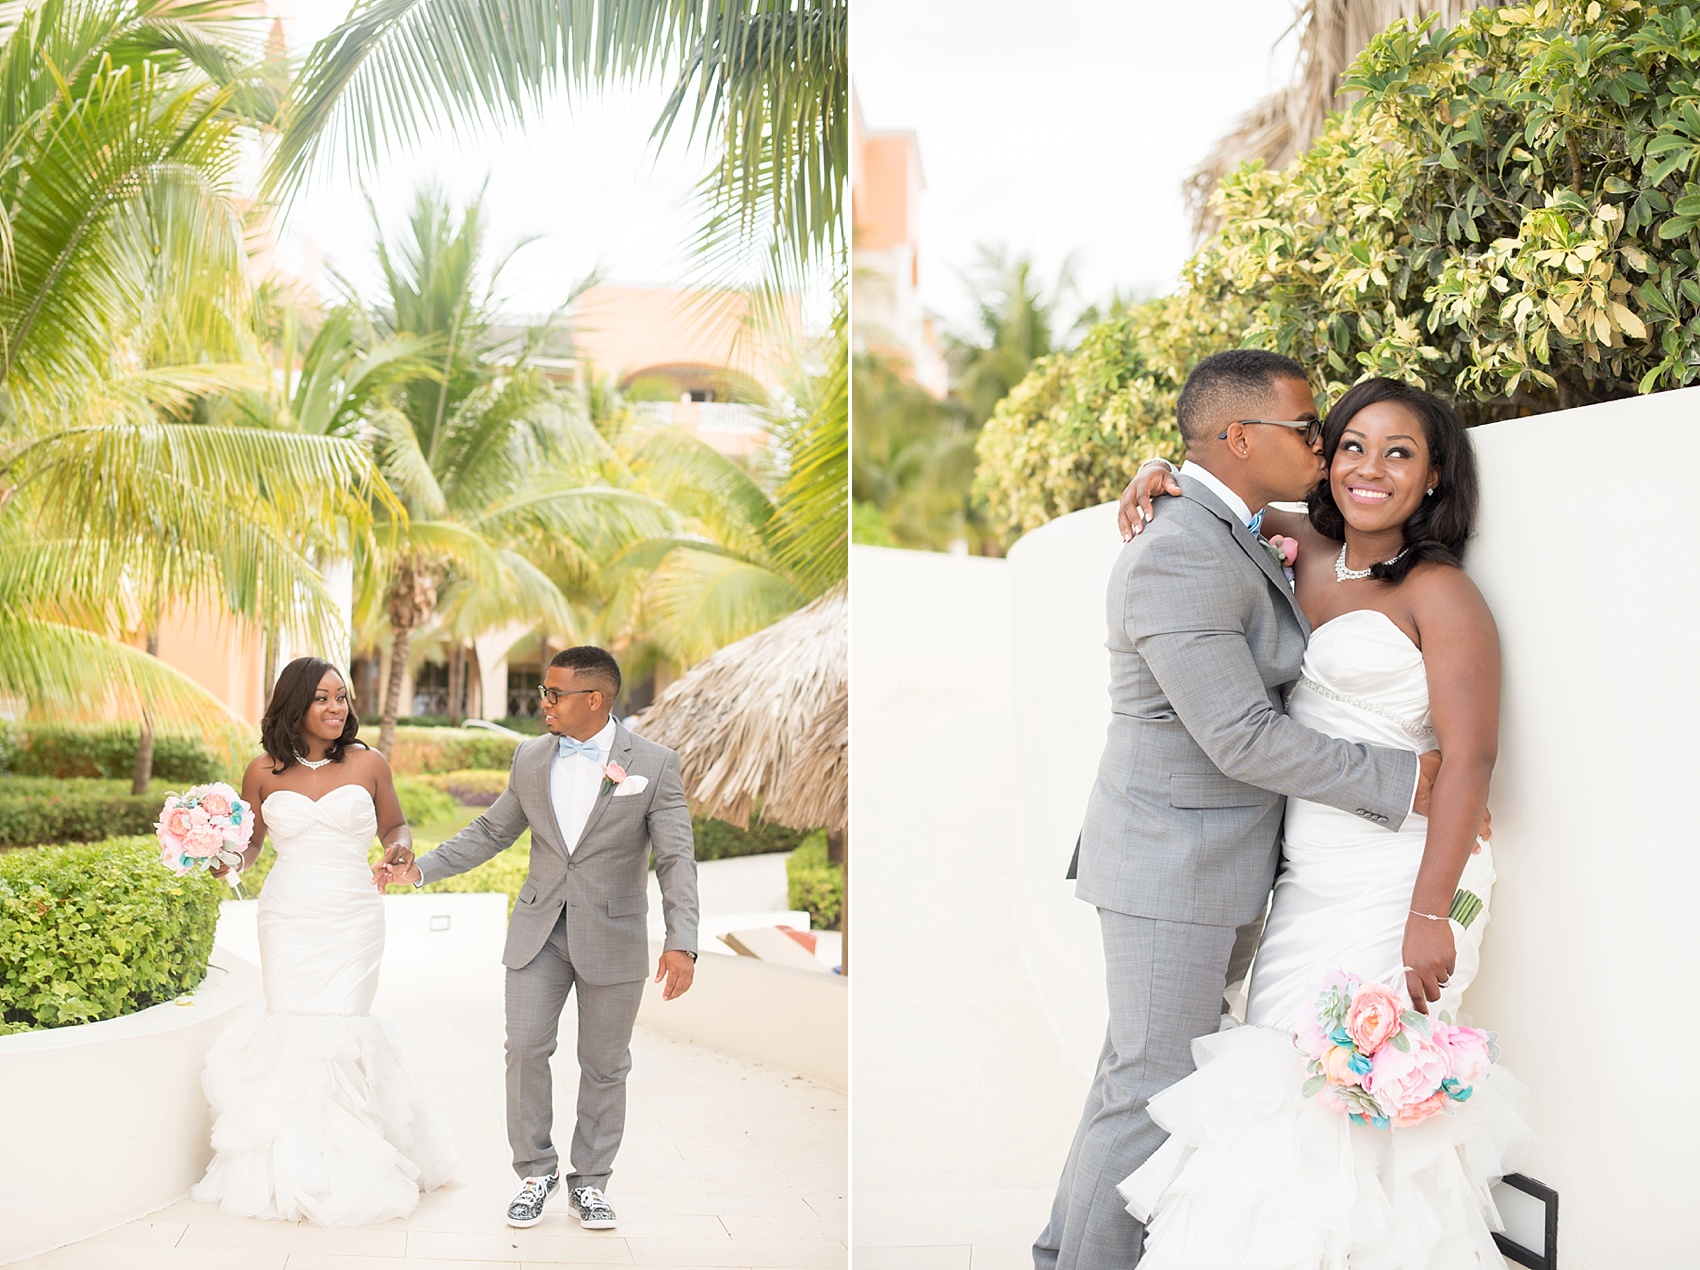 Iberostar Jamaica wedding photos, bride and groom. Images by Mikkel Paige Photography.